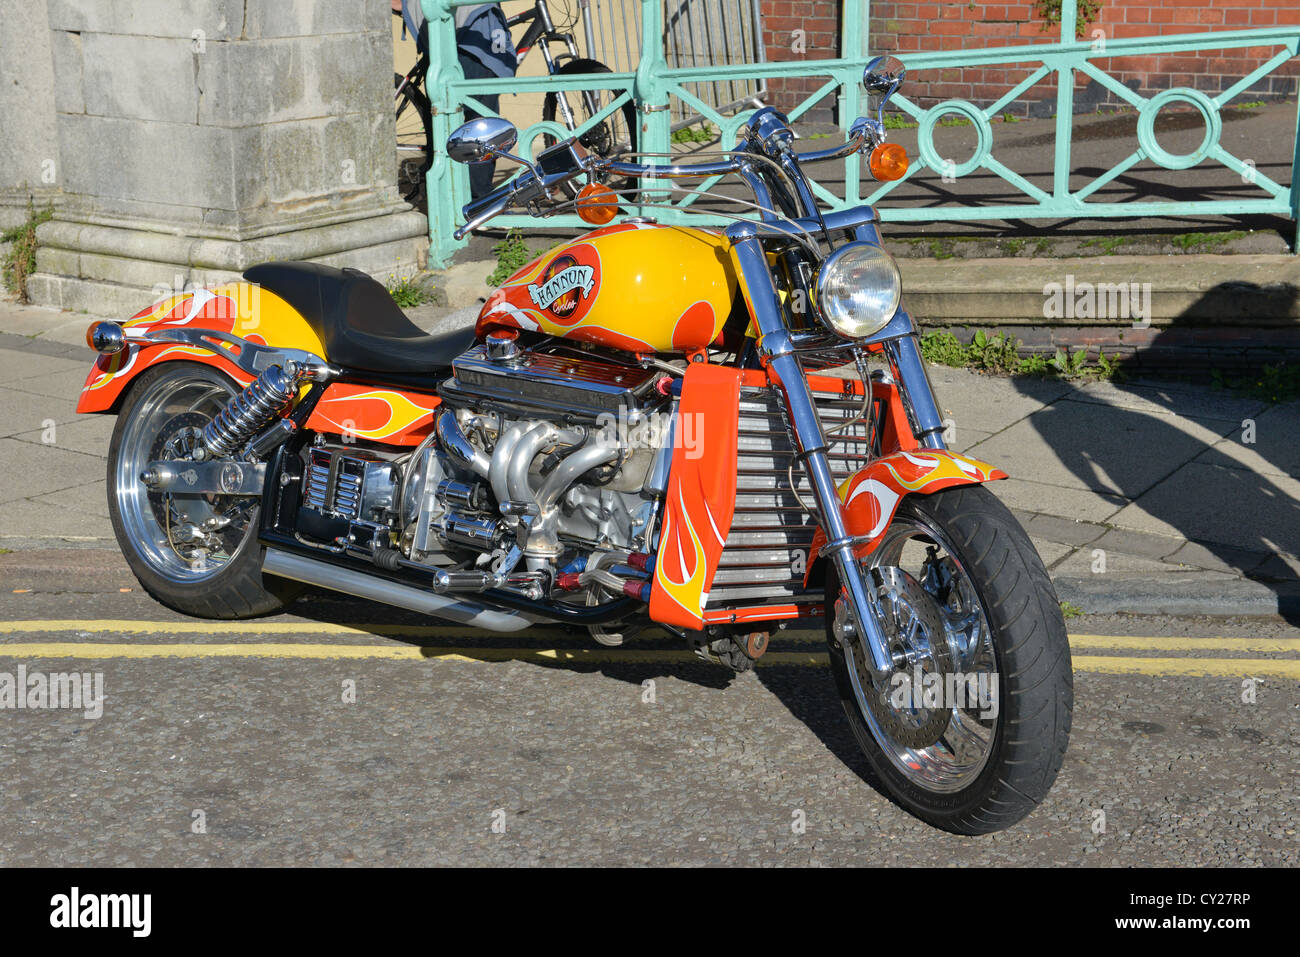 V8 Motorcycle Stockfotos und -bilder Kaufen - Alamy